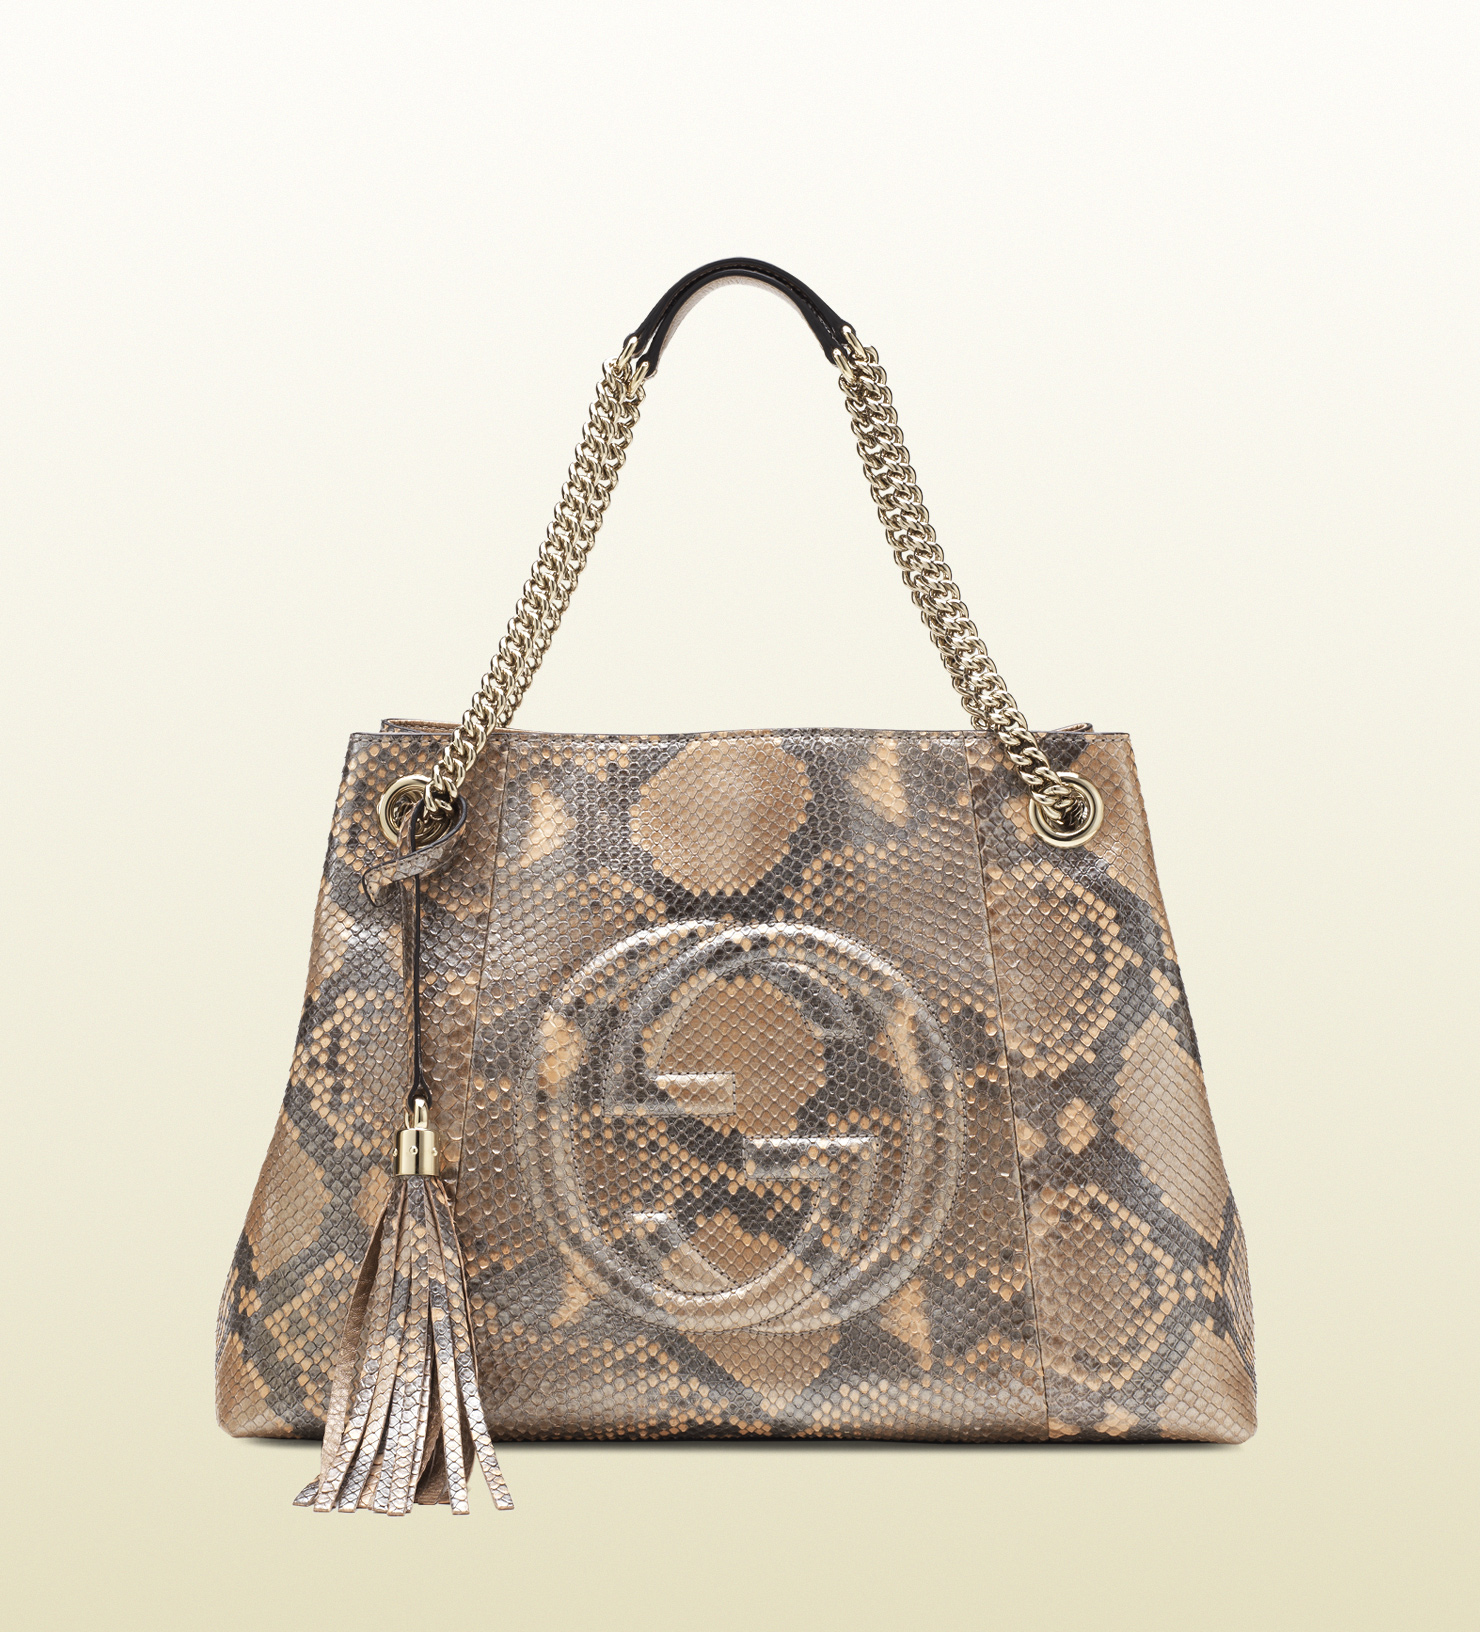 Lyst - Gucci Soho Metallic Python Shoulder Bag in Brown